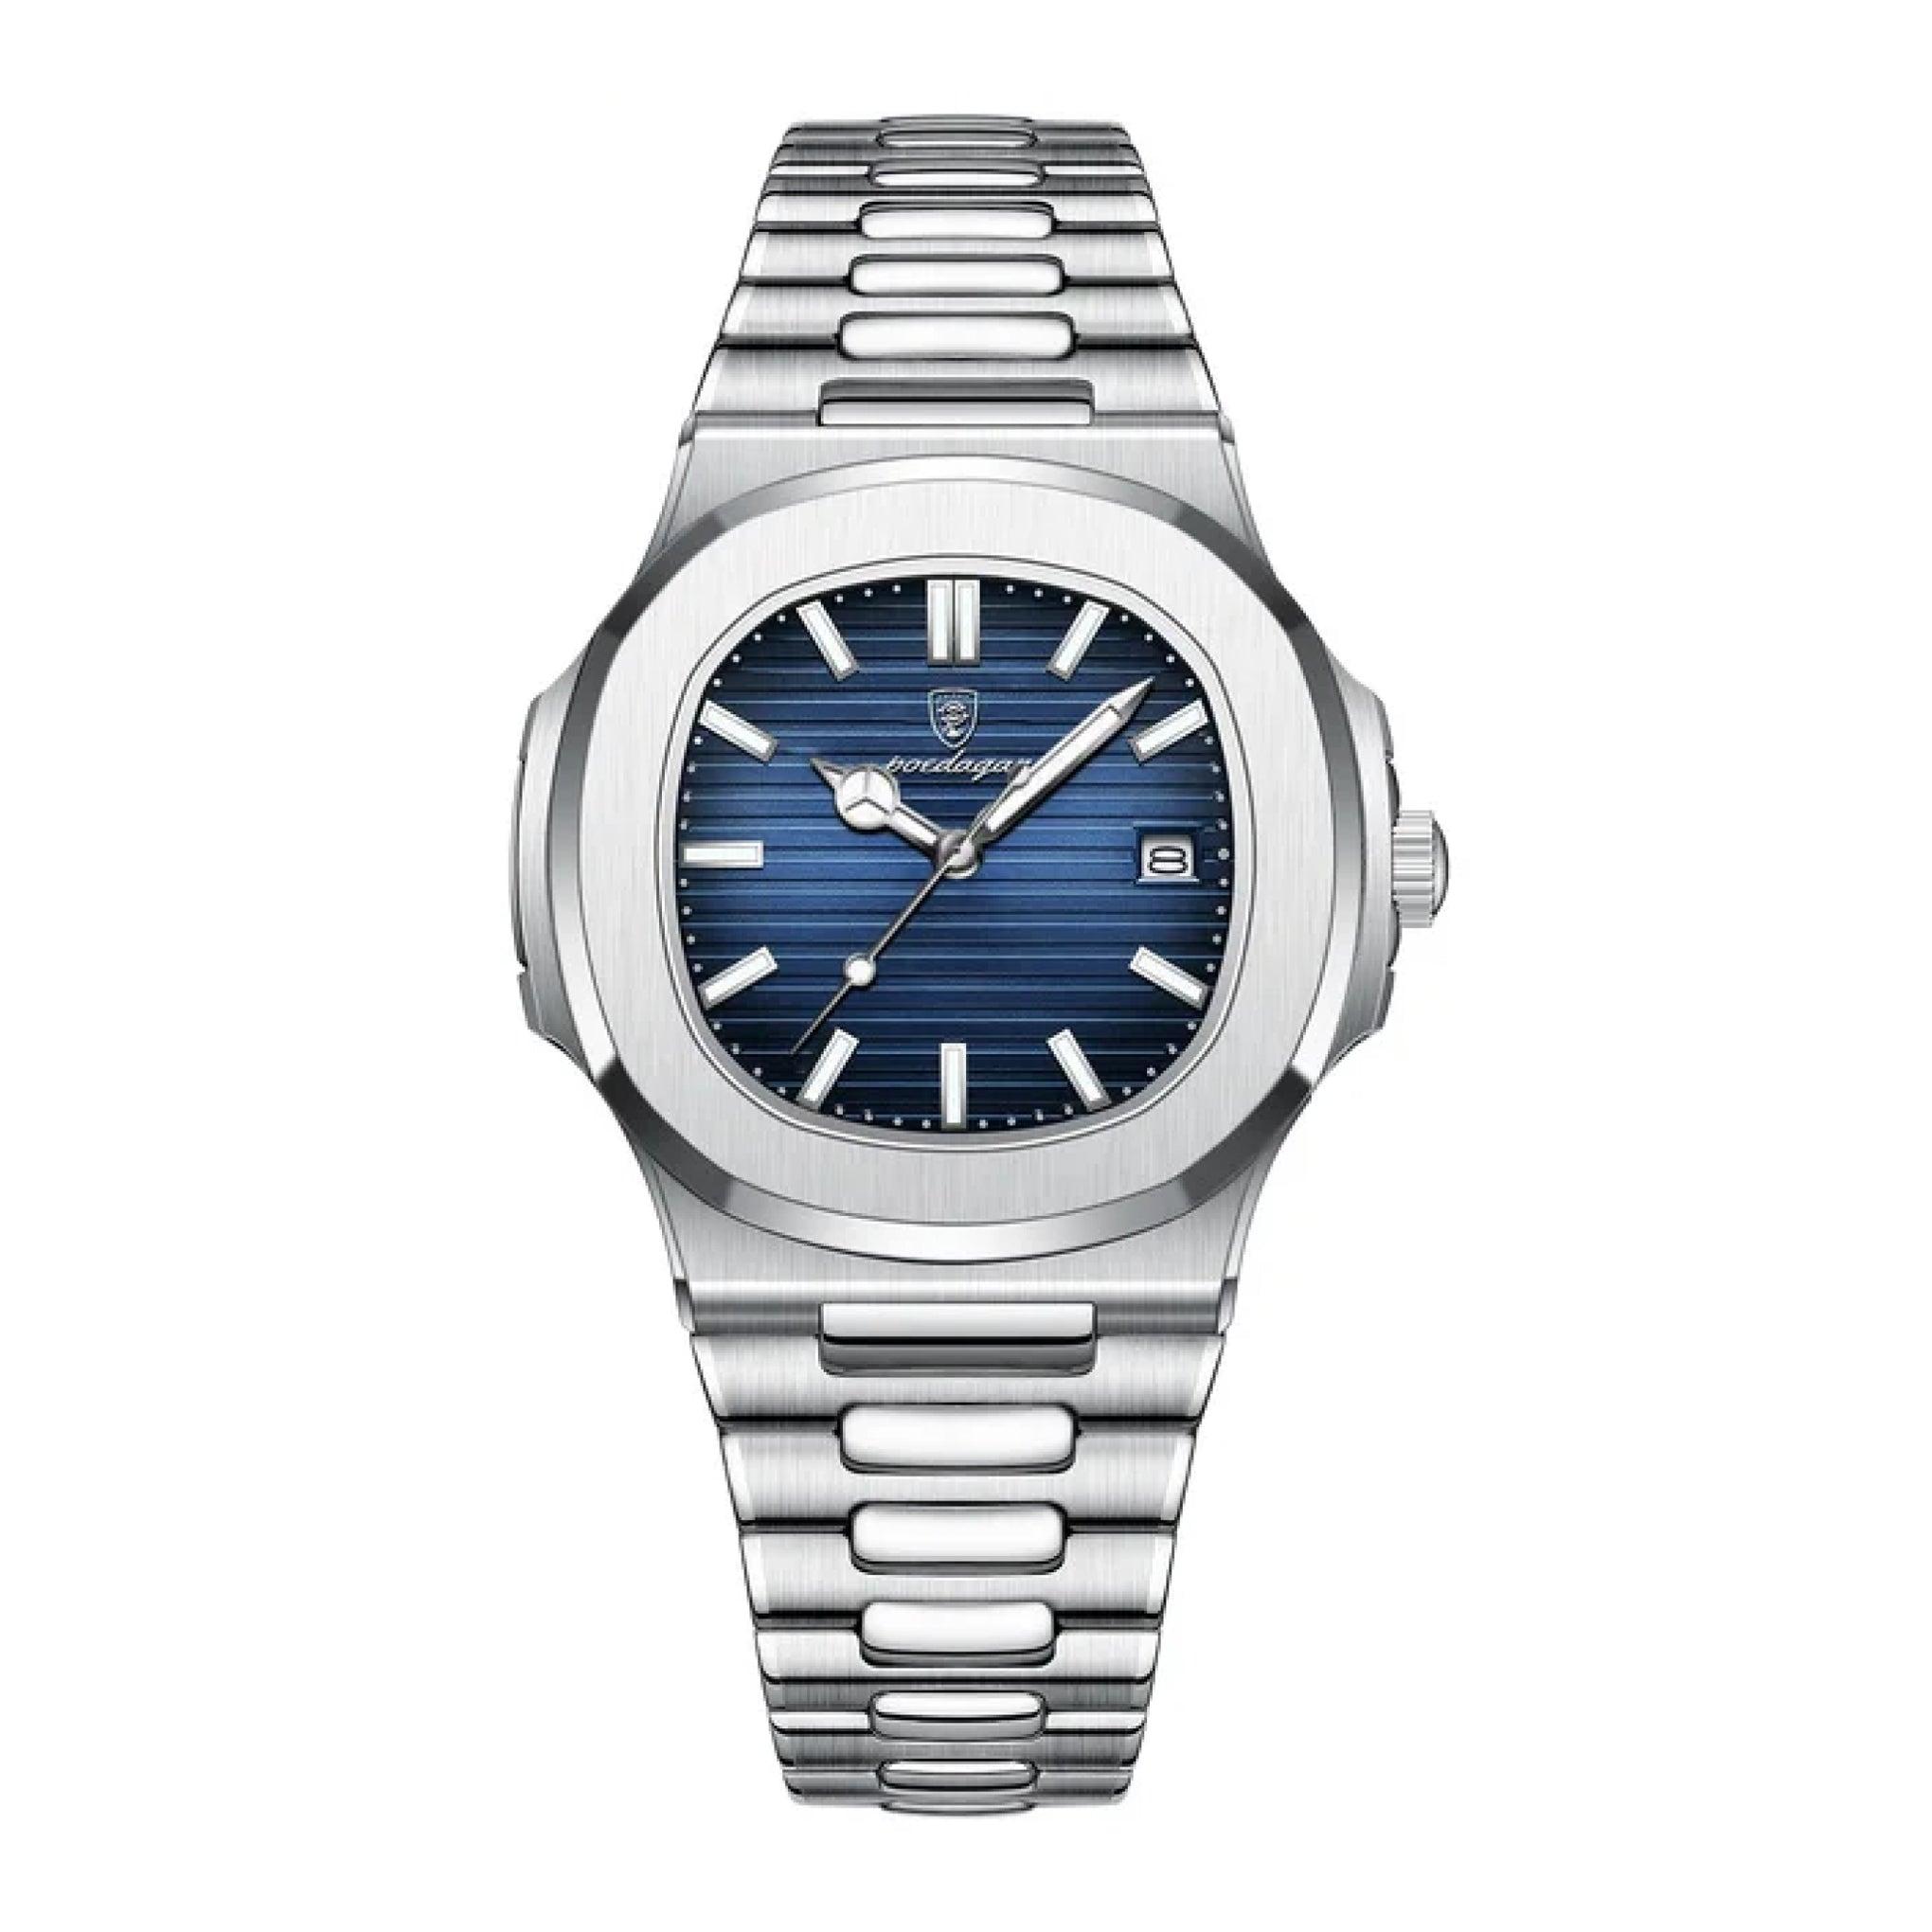 Poedagar Men's Luminous Analog Quartz Stainless Steel Band Blue Dial Wristwatch - 613slbus